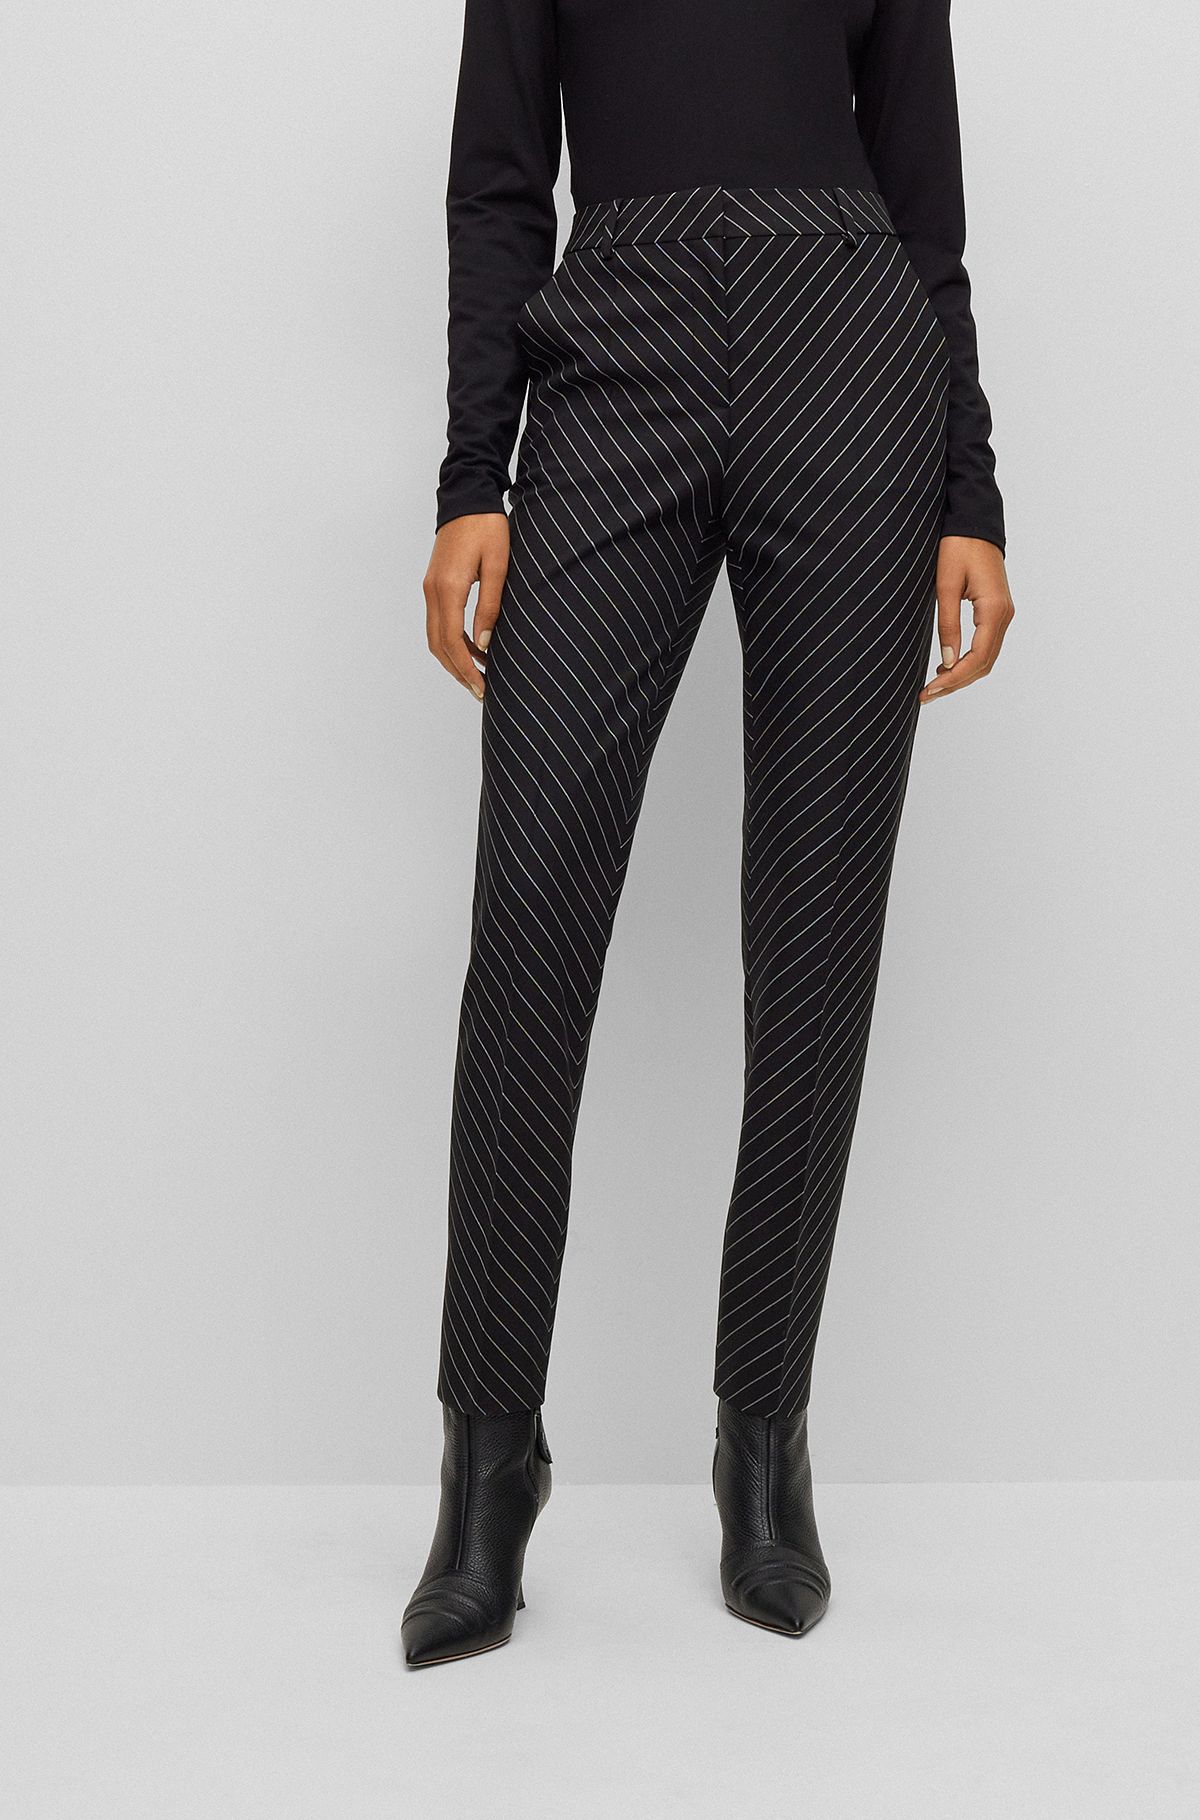 Pantalones regular fit en lana elástica con raya diplomática diagonal, Negro